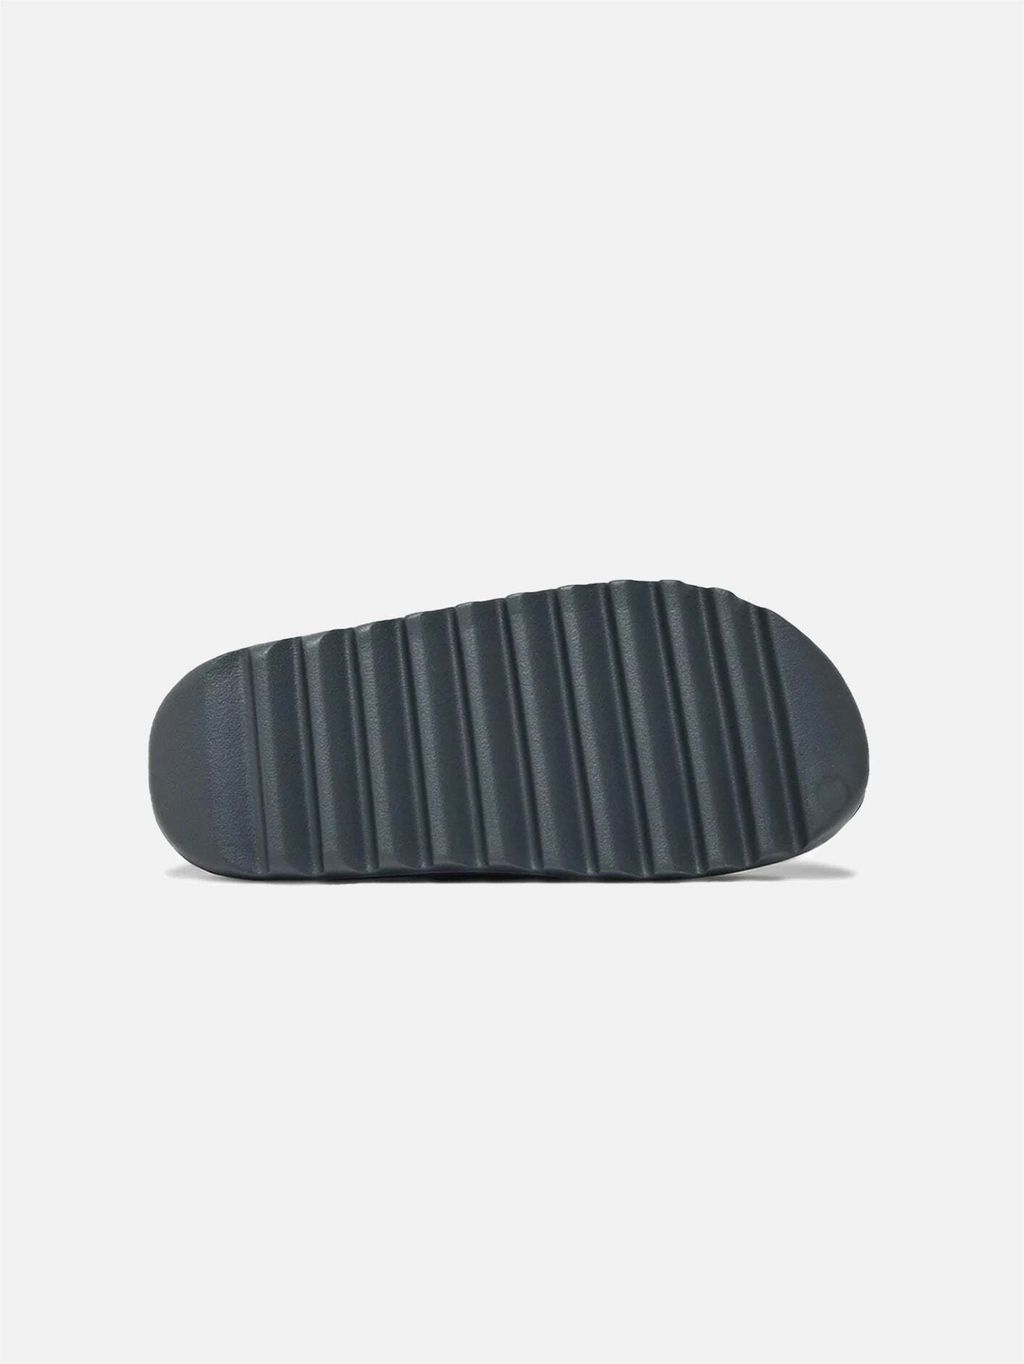 adidas-yeezy-slides-slate-grey-ID2350-release-date-3